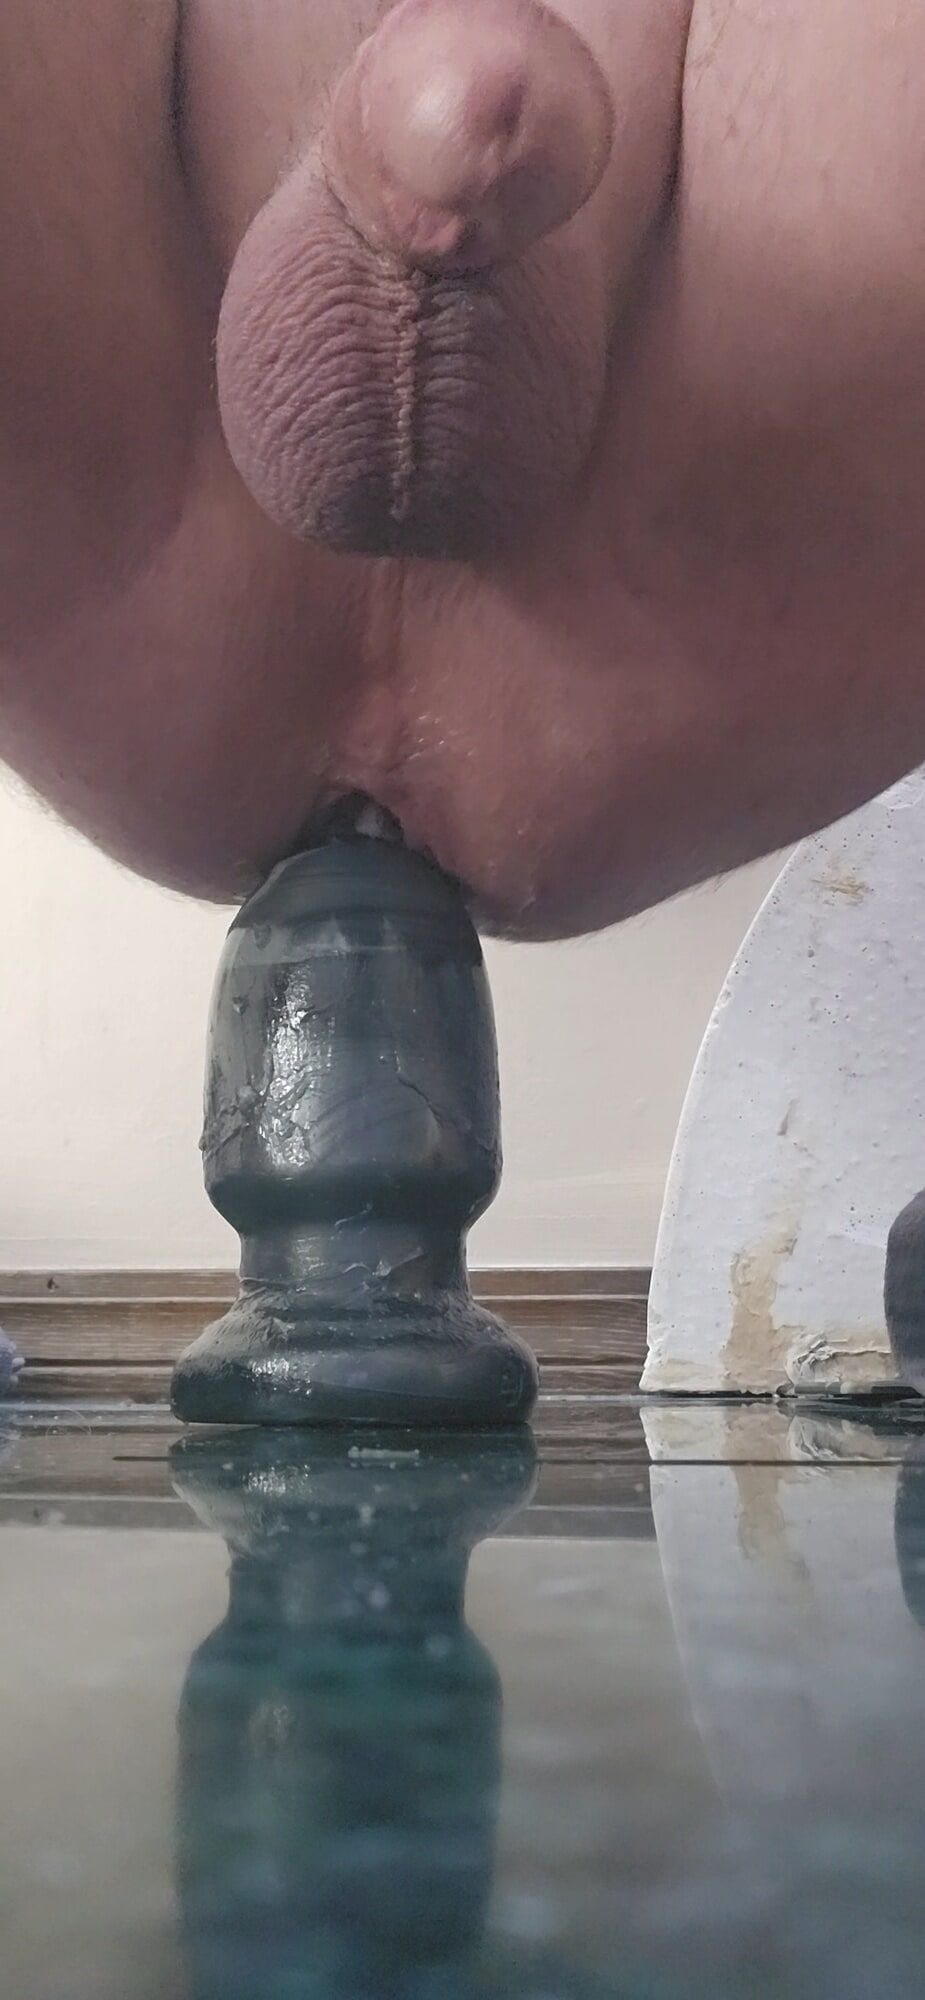 Presume dripping cock huge anal plug #10